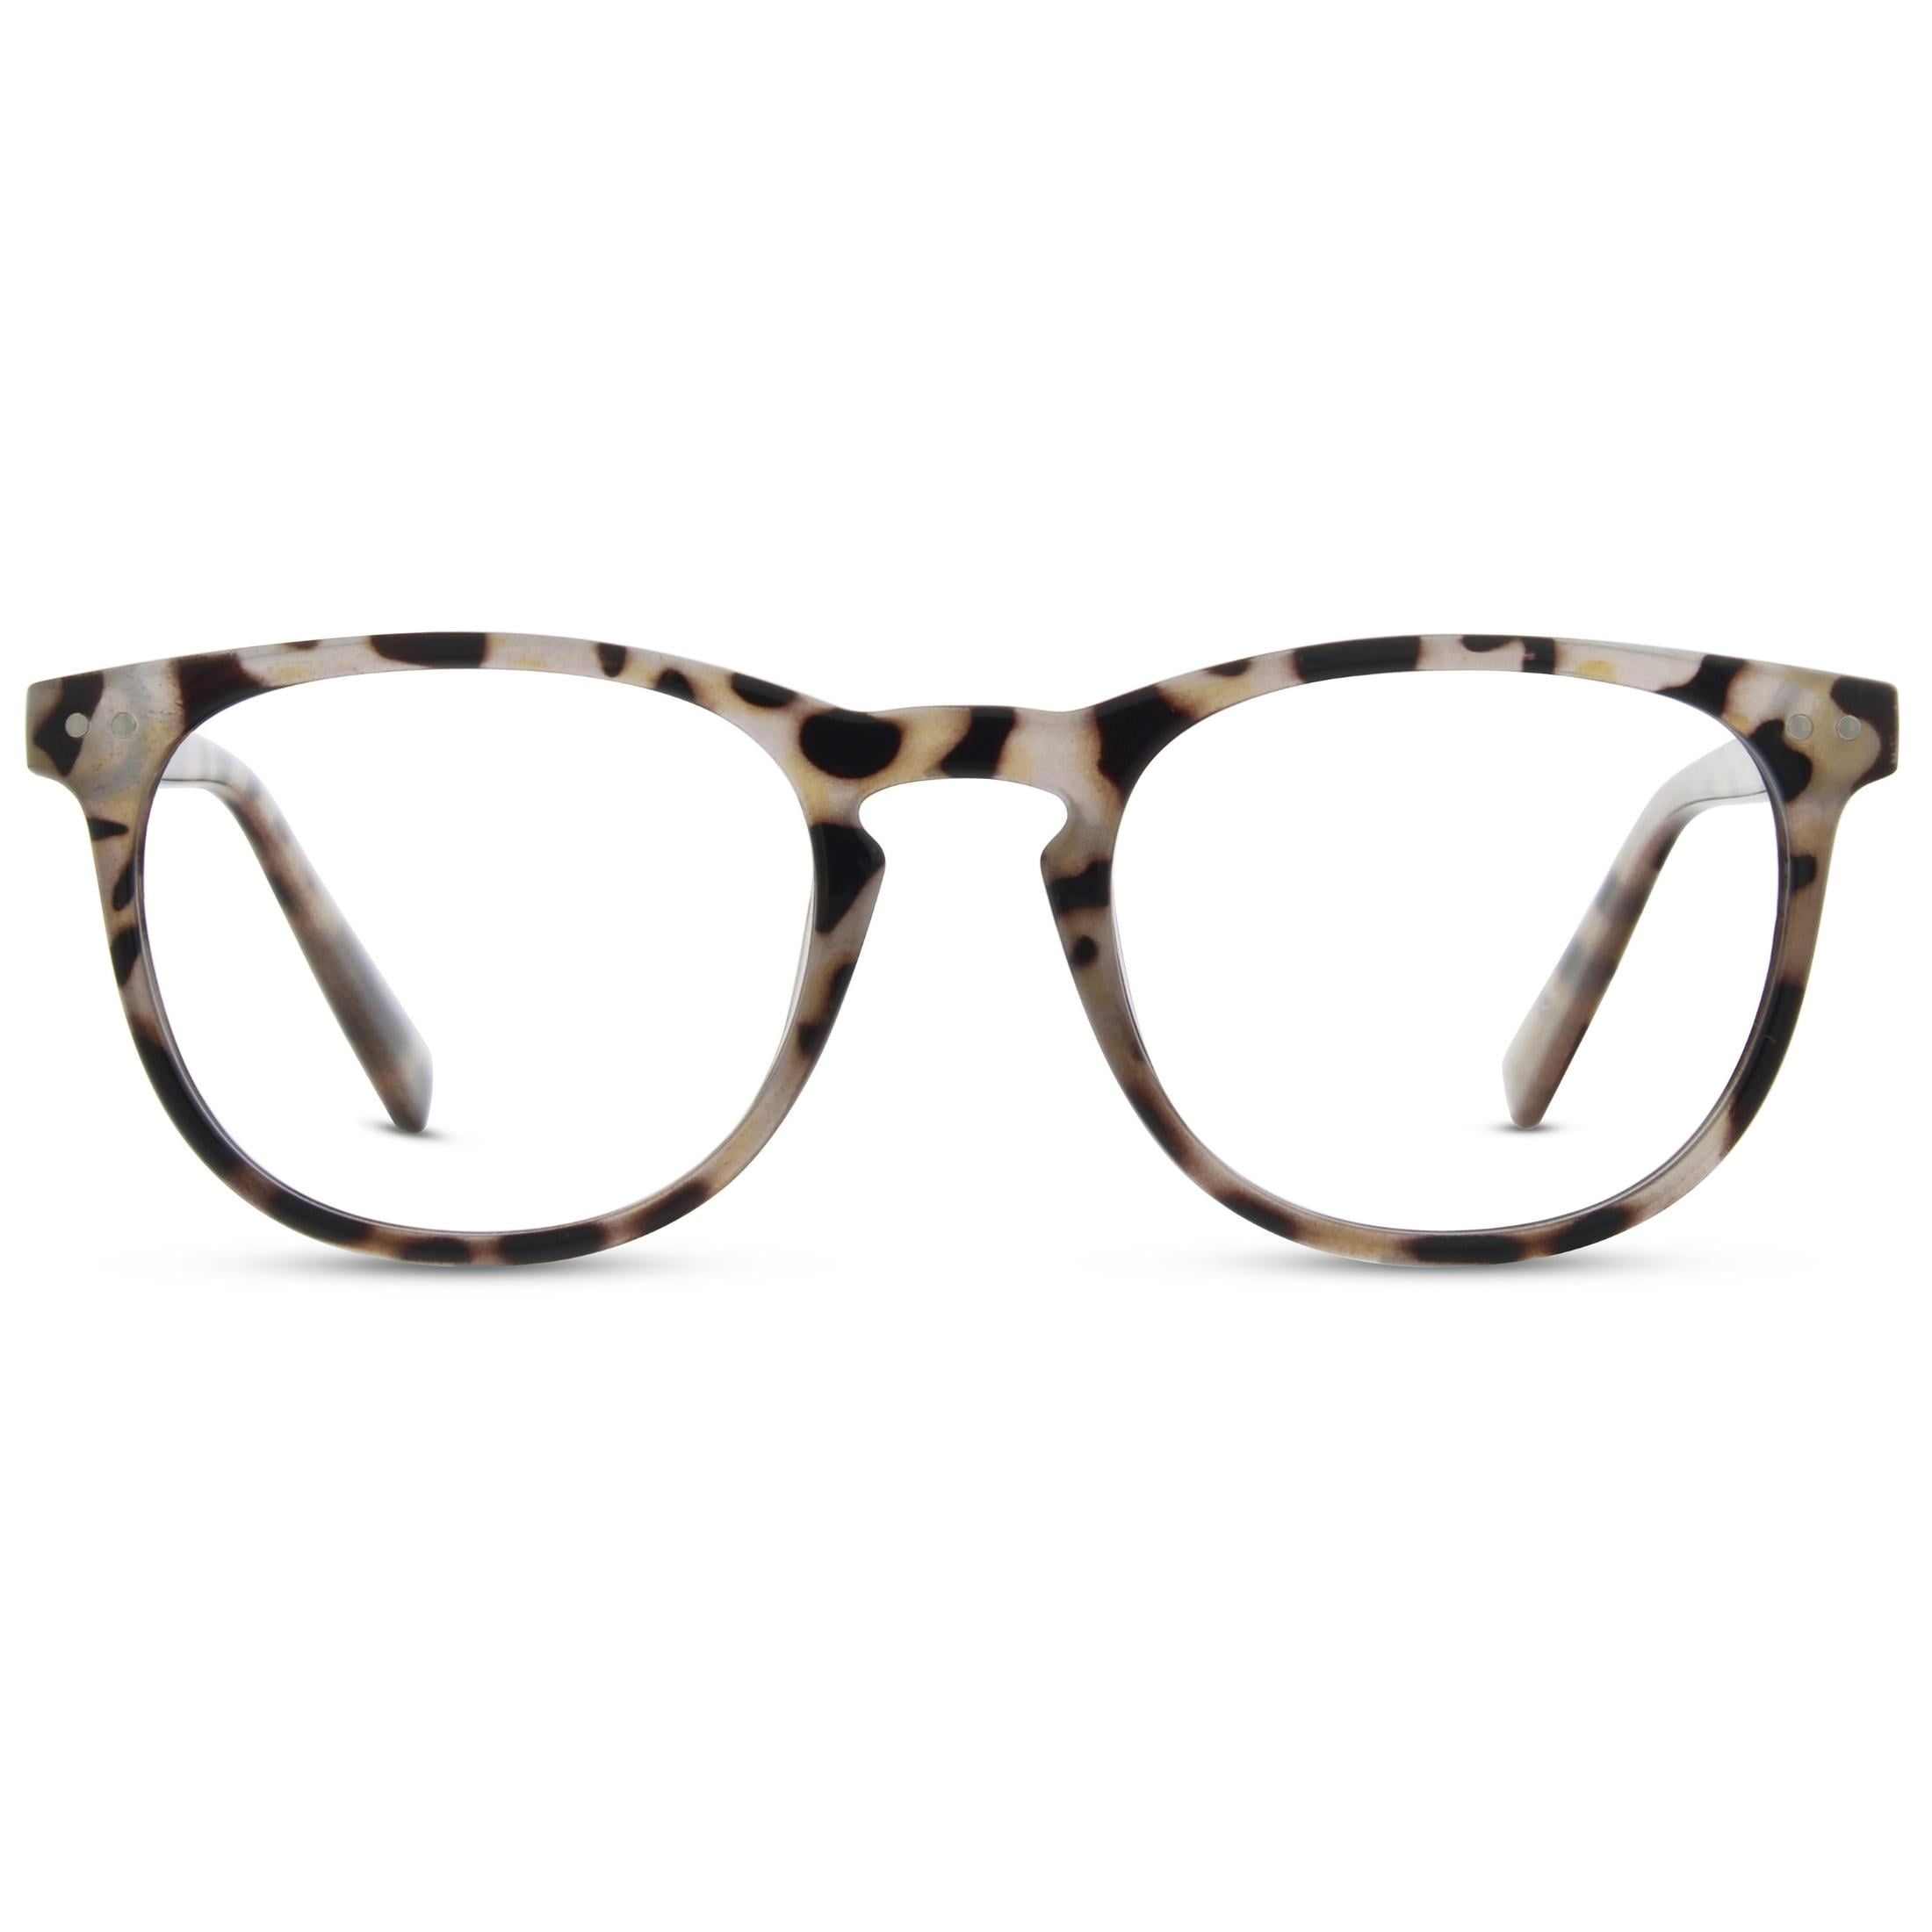 Jonas Paul Eyewear Blue Light Glasses Cream Tortoise, Magnifying Acrylic Lens, Unisex, 1.25